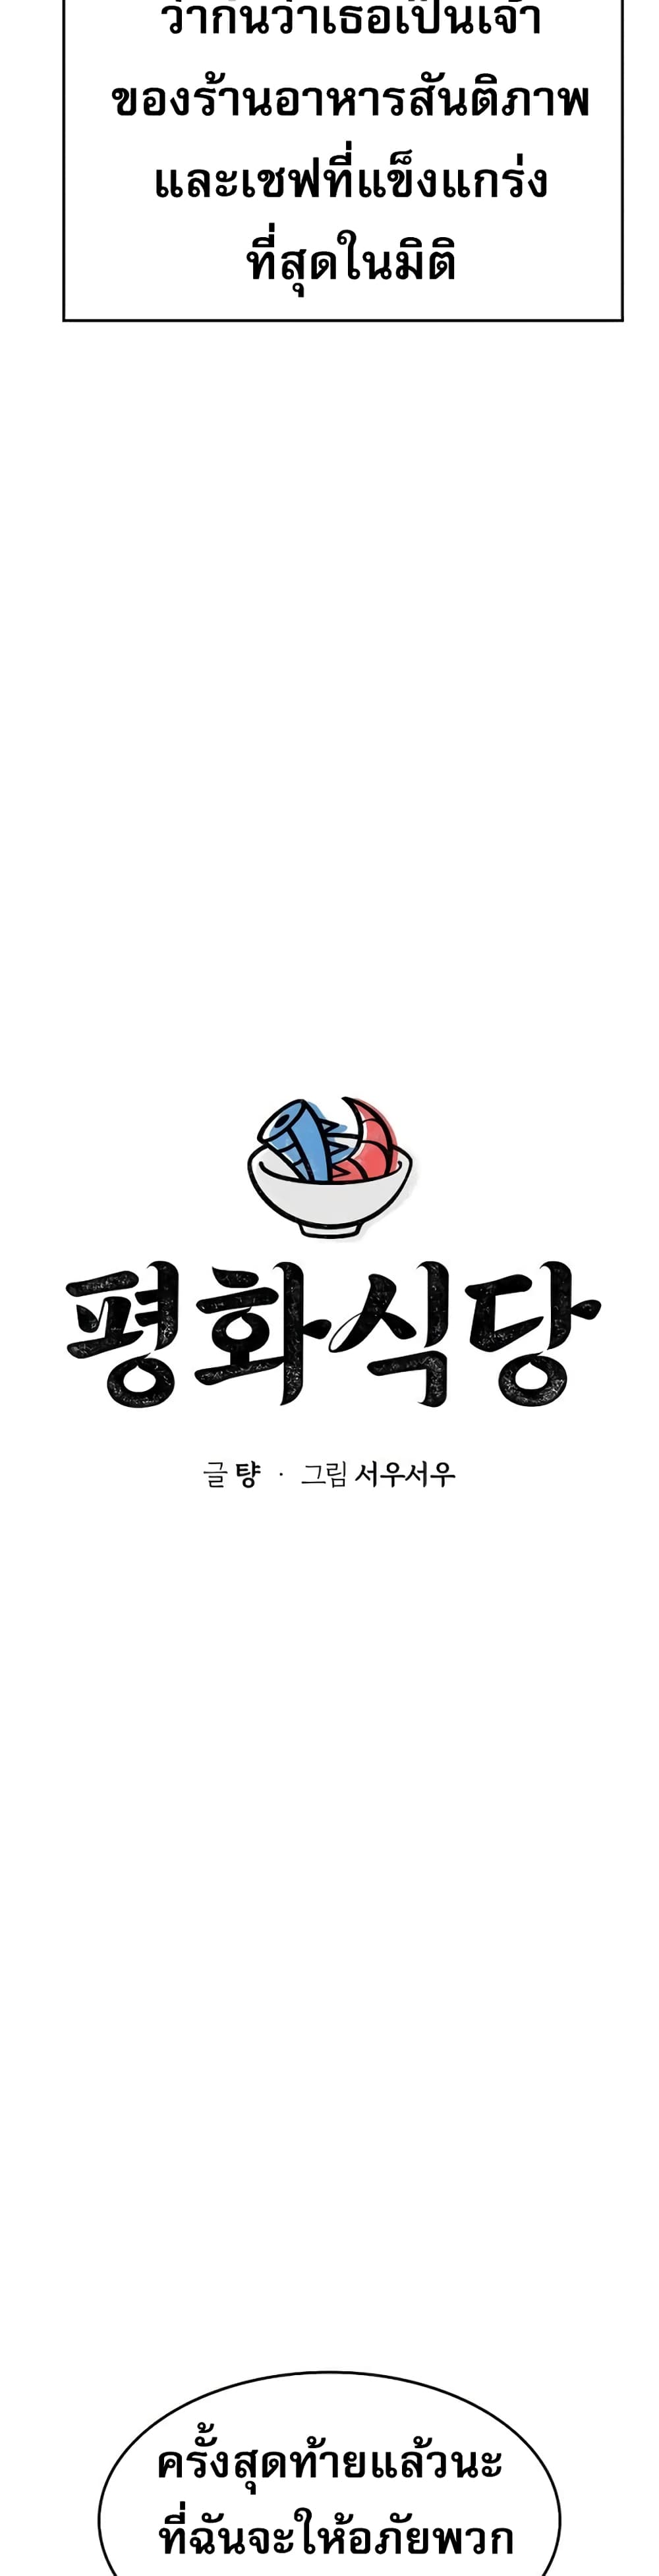 Pyeonghwa Restaurant ตอนที่ 2 (27)